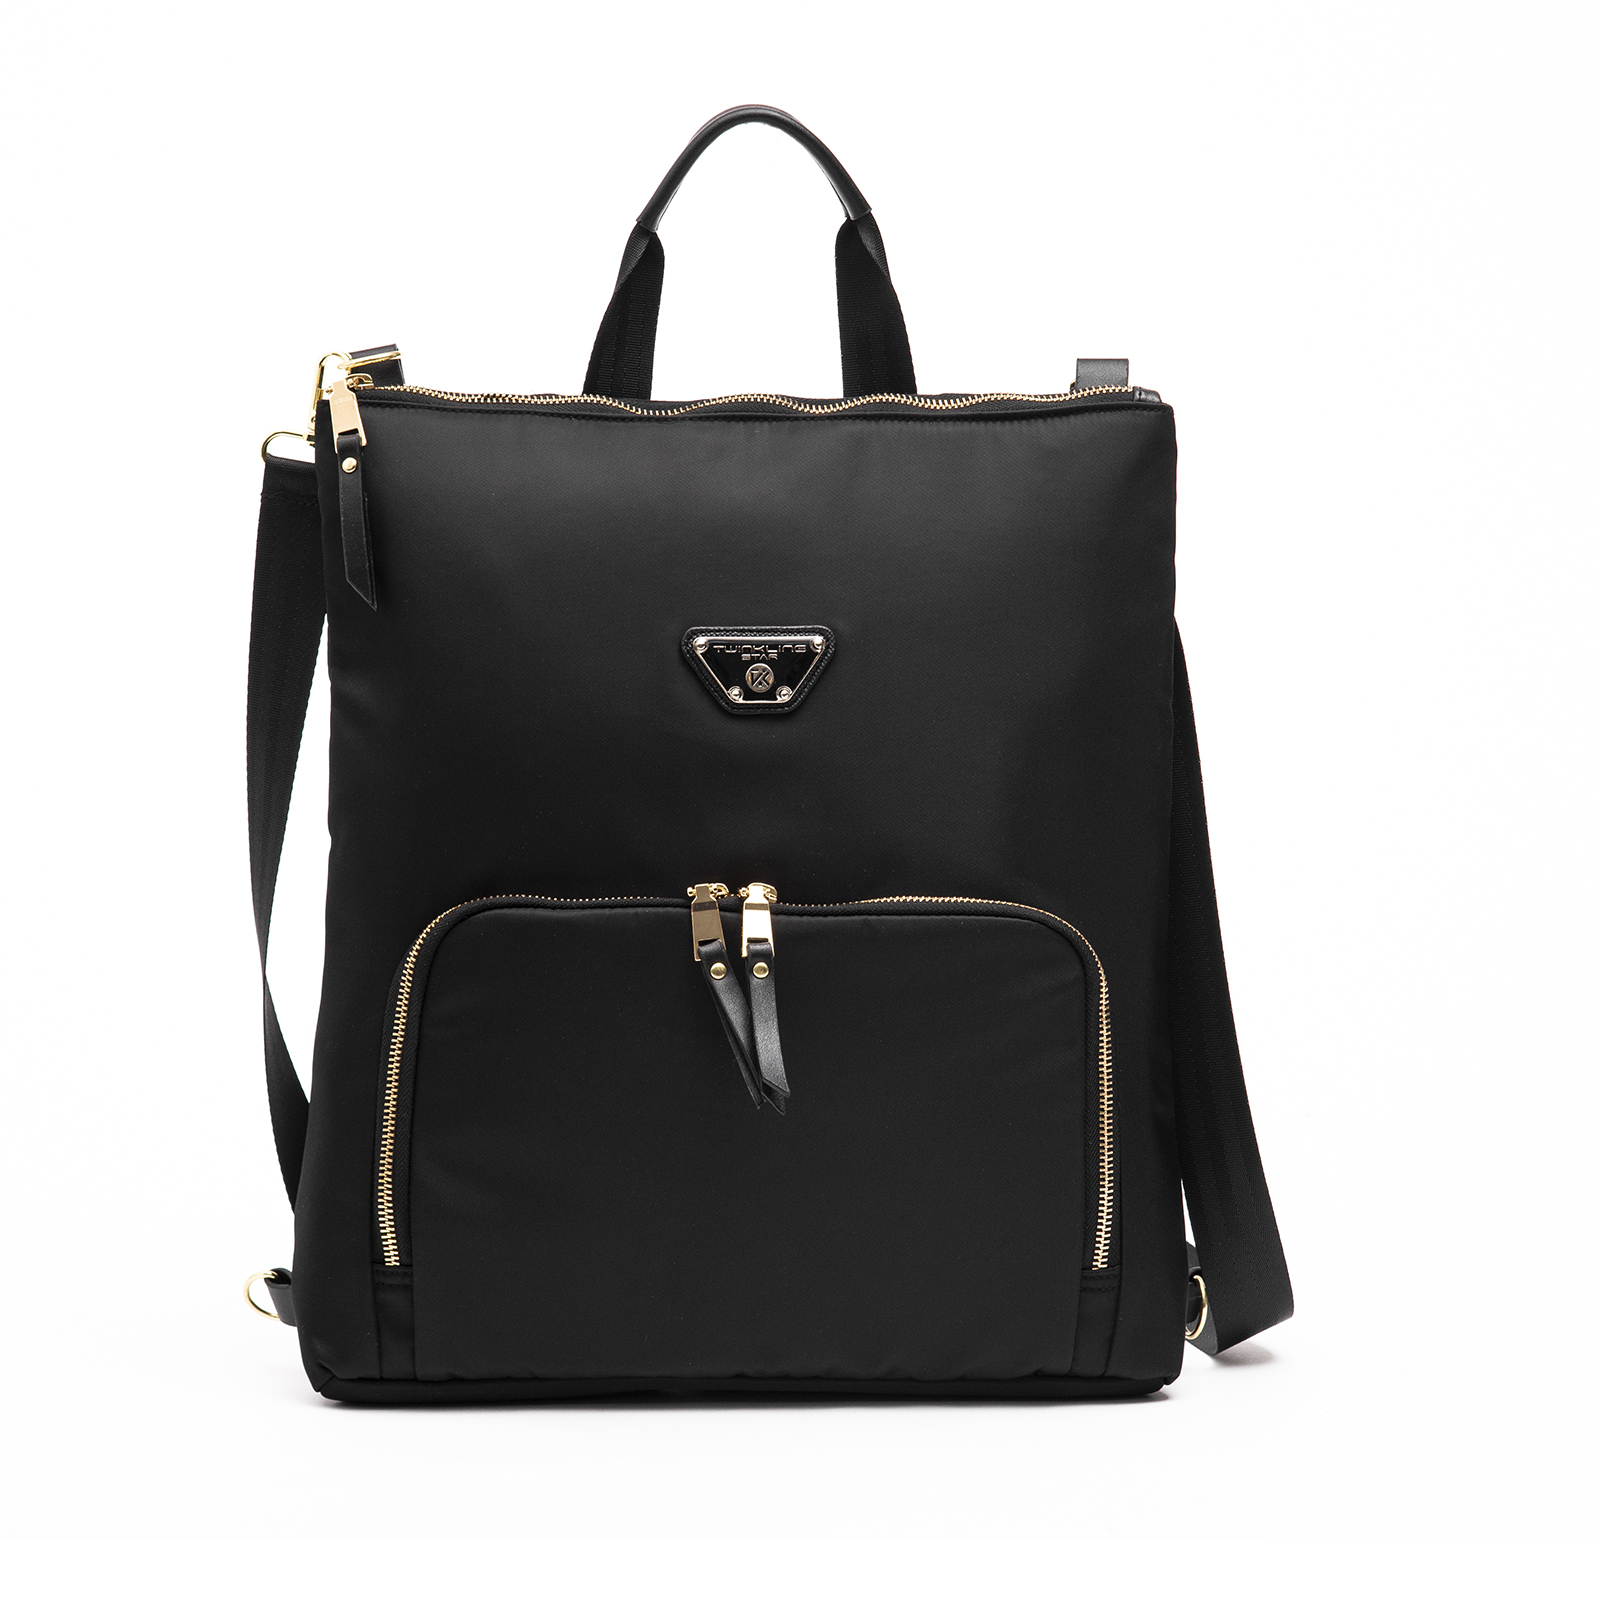 Cheapest Price Travel Sport Bag - Fashion simple black woman shoulder bag – Twinkling Star